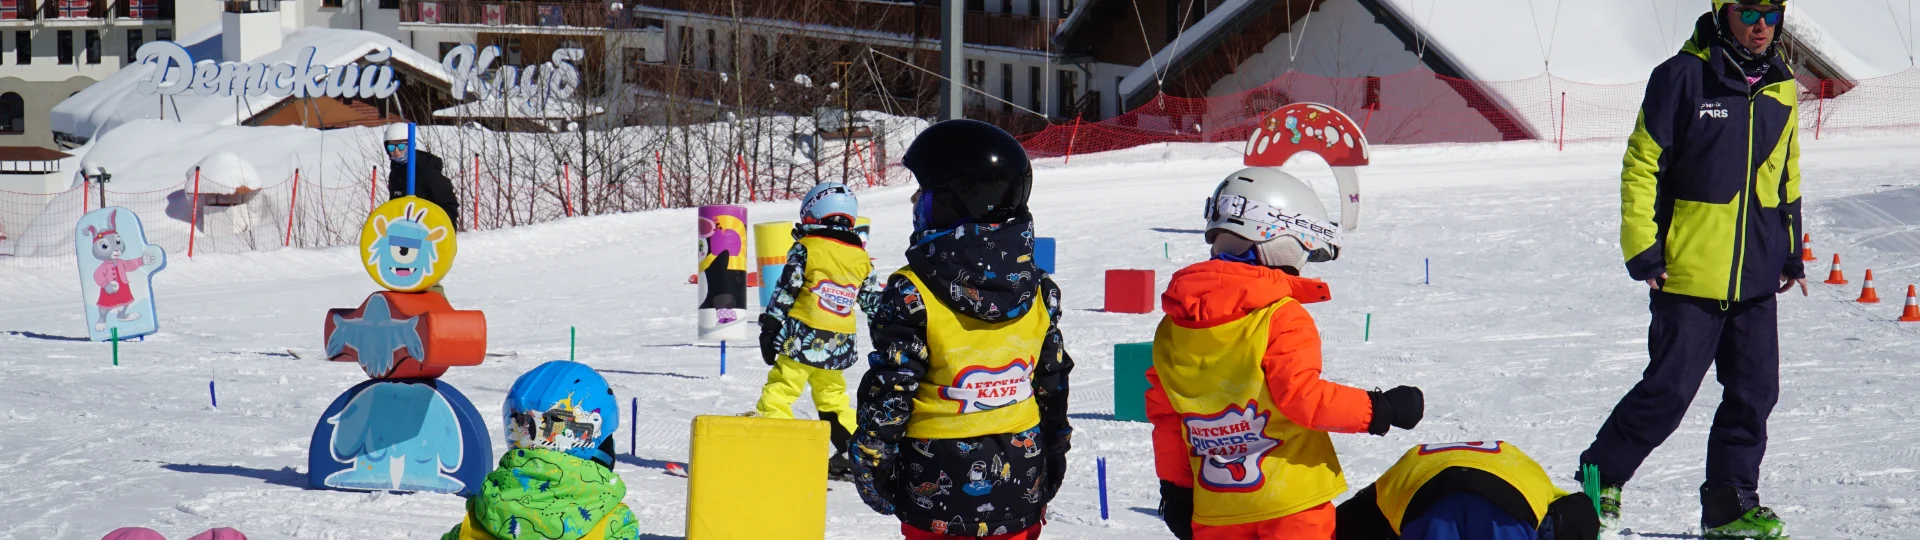 How to choose a child ski helmet?